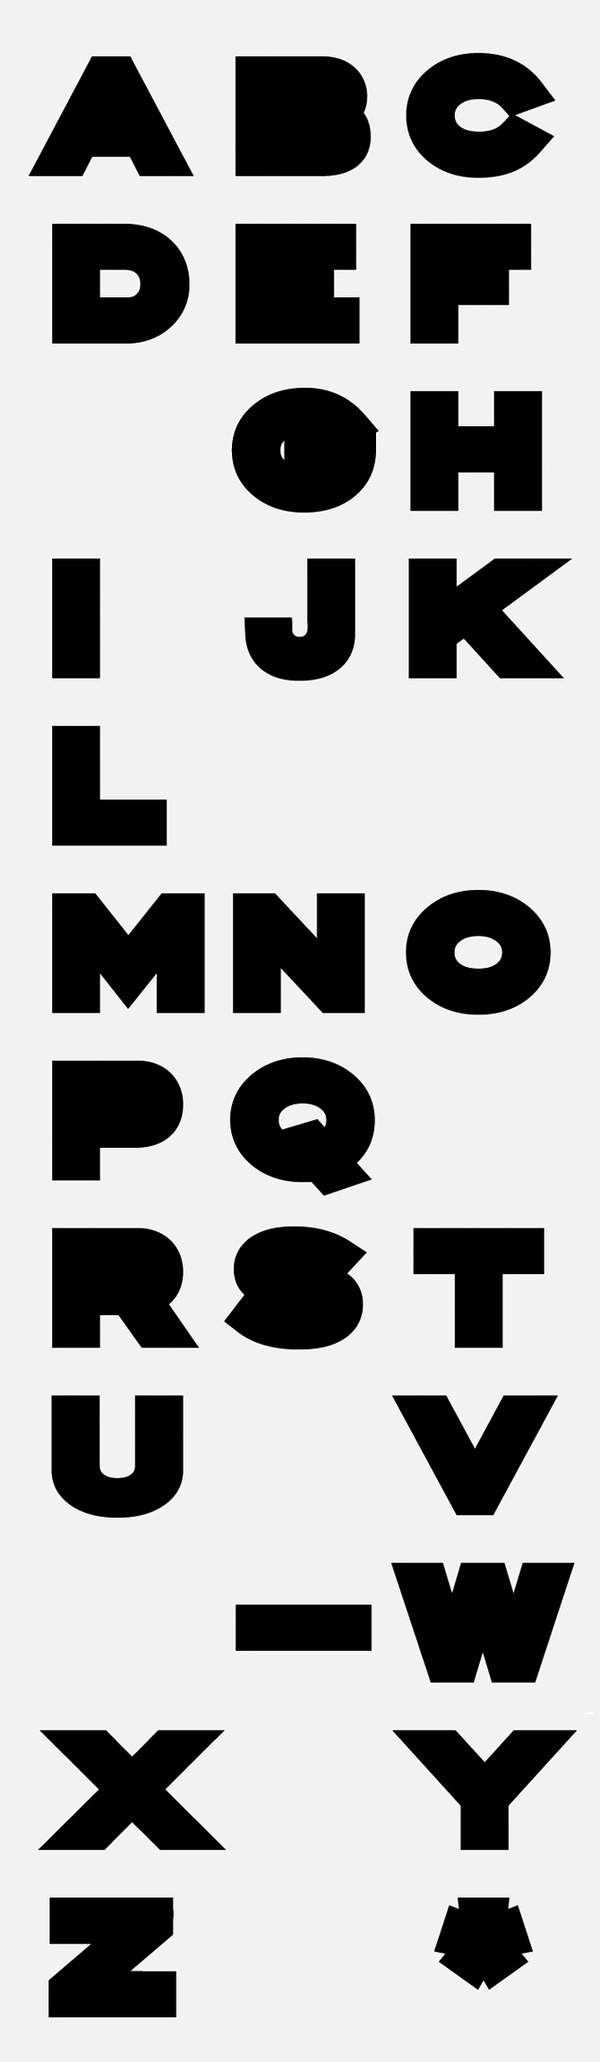 Typography inspiration example #152: Portfolio of Vincent Lowe #typography